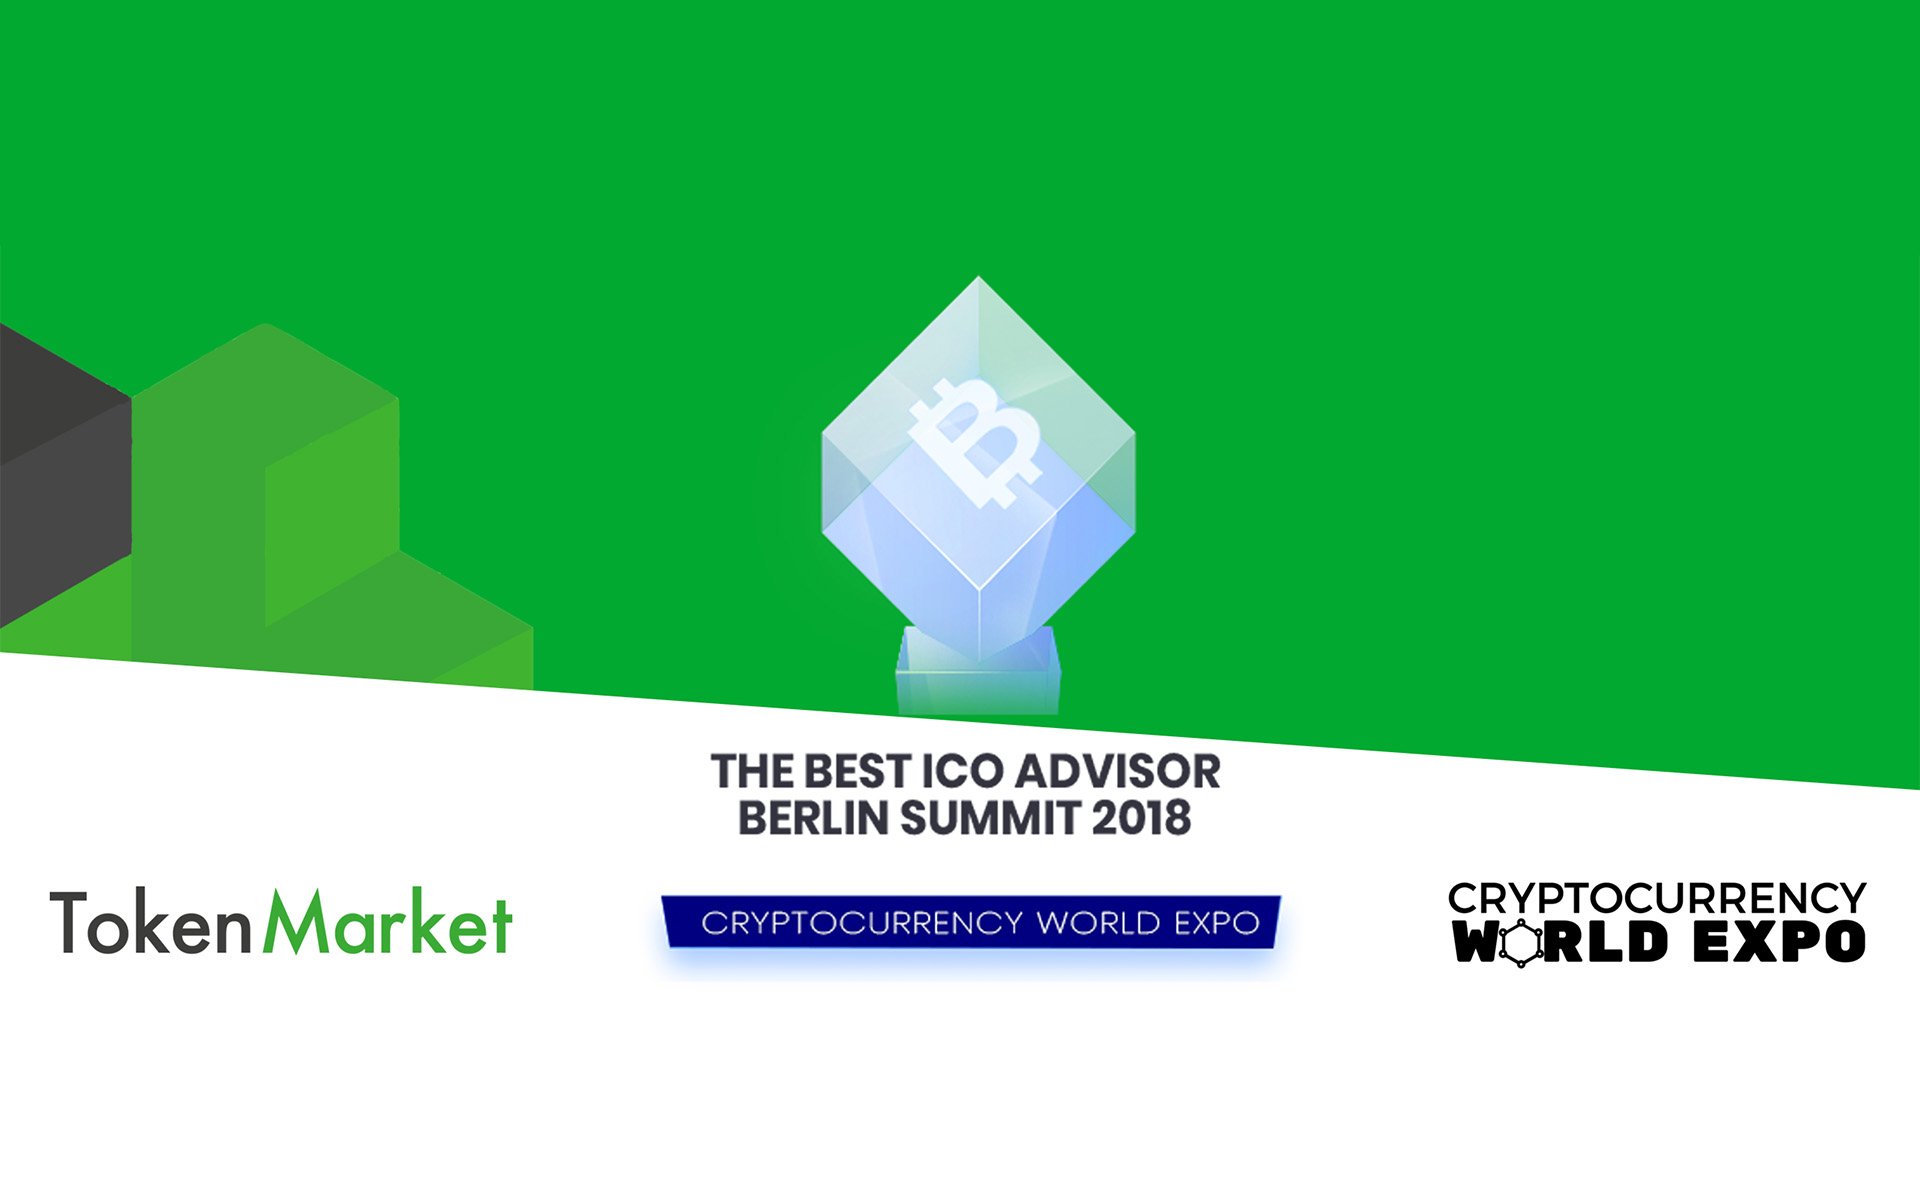 TokenMarket Win Prestigious 'Best ICO Advisory Award' at Cryptocurrency World Expo 2018